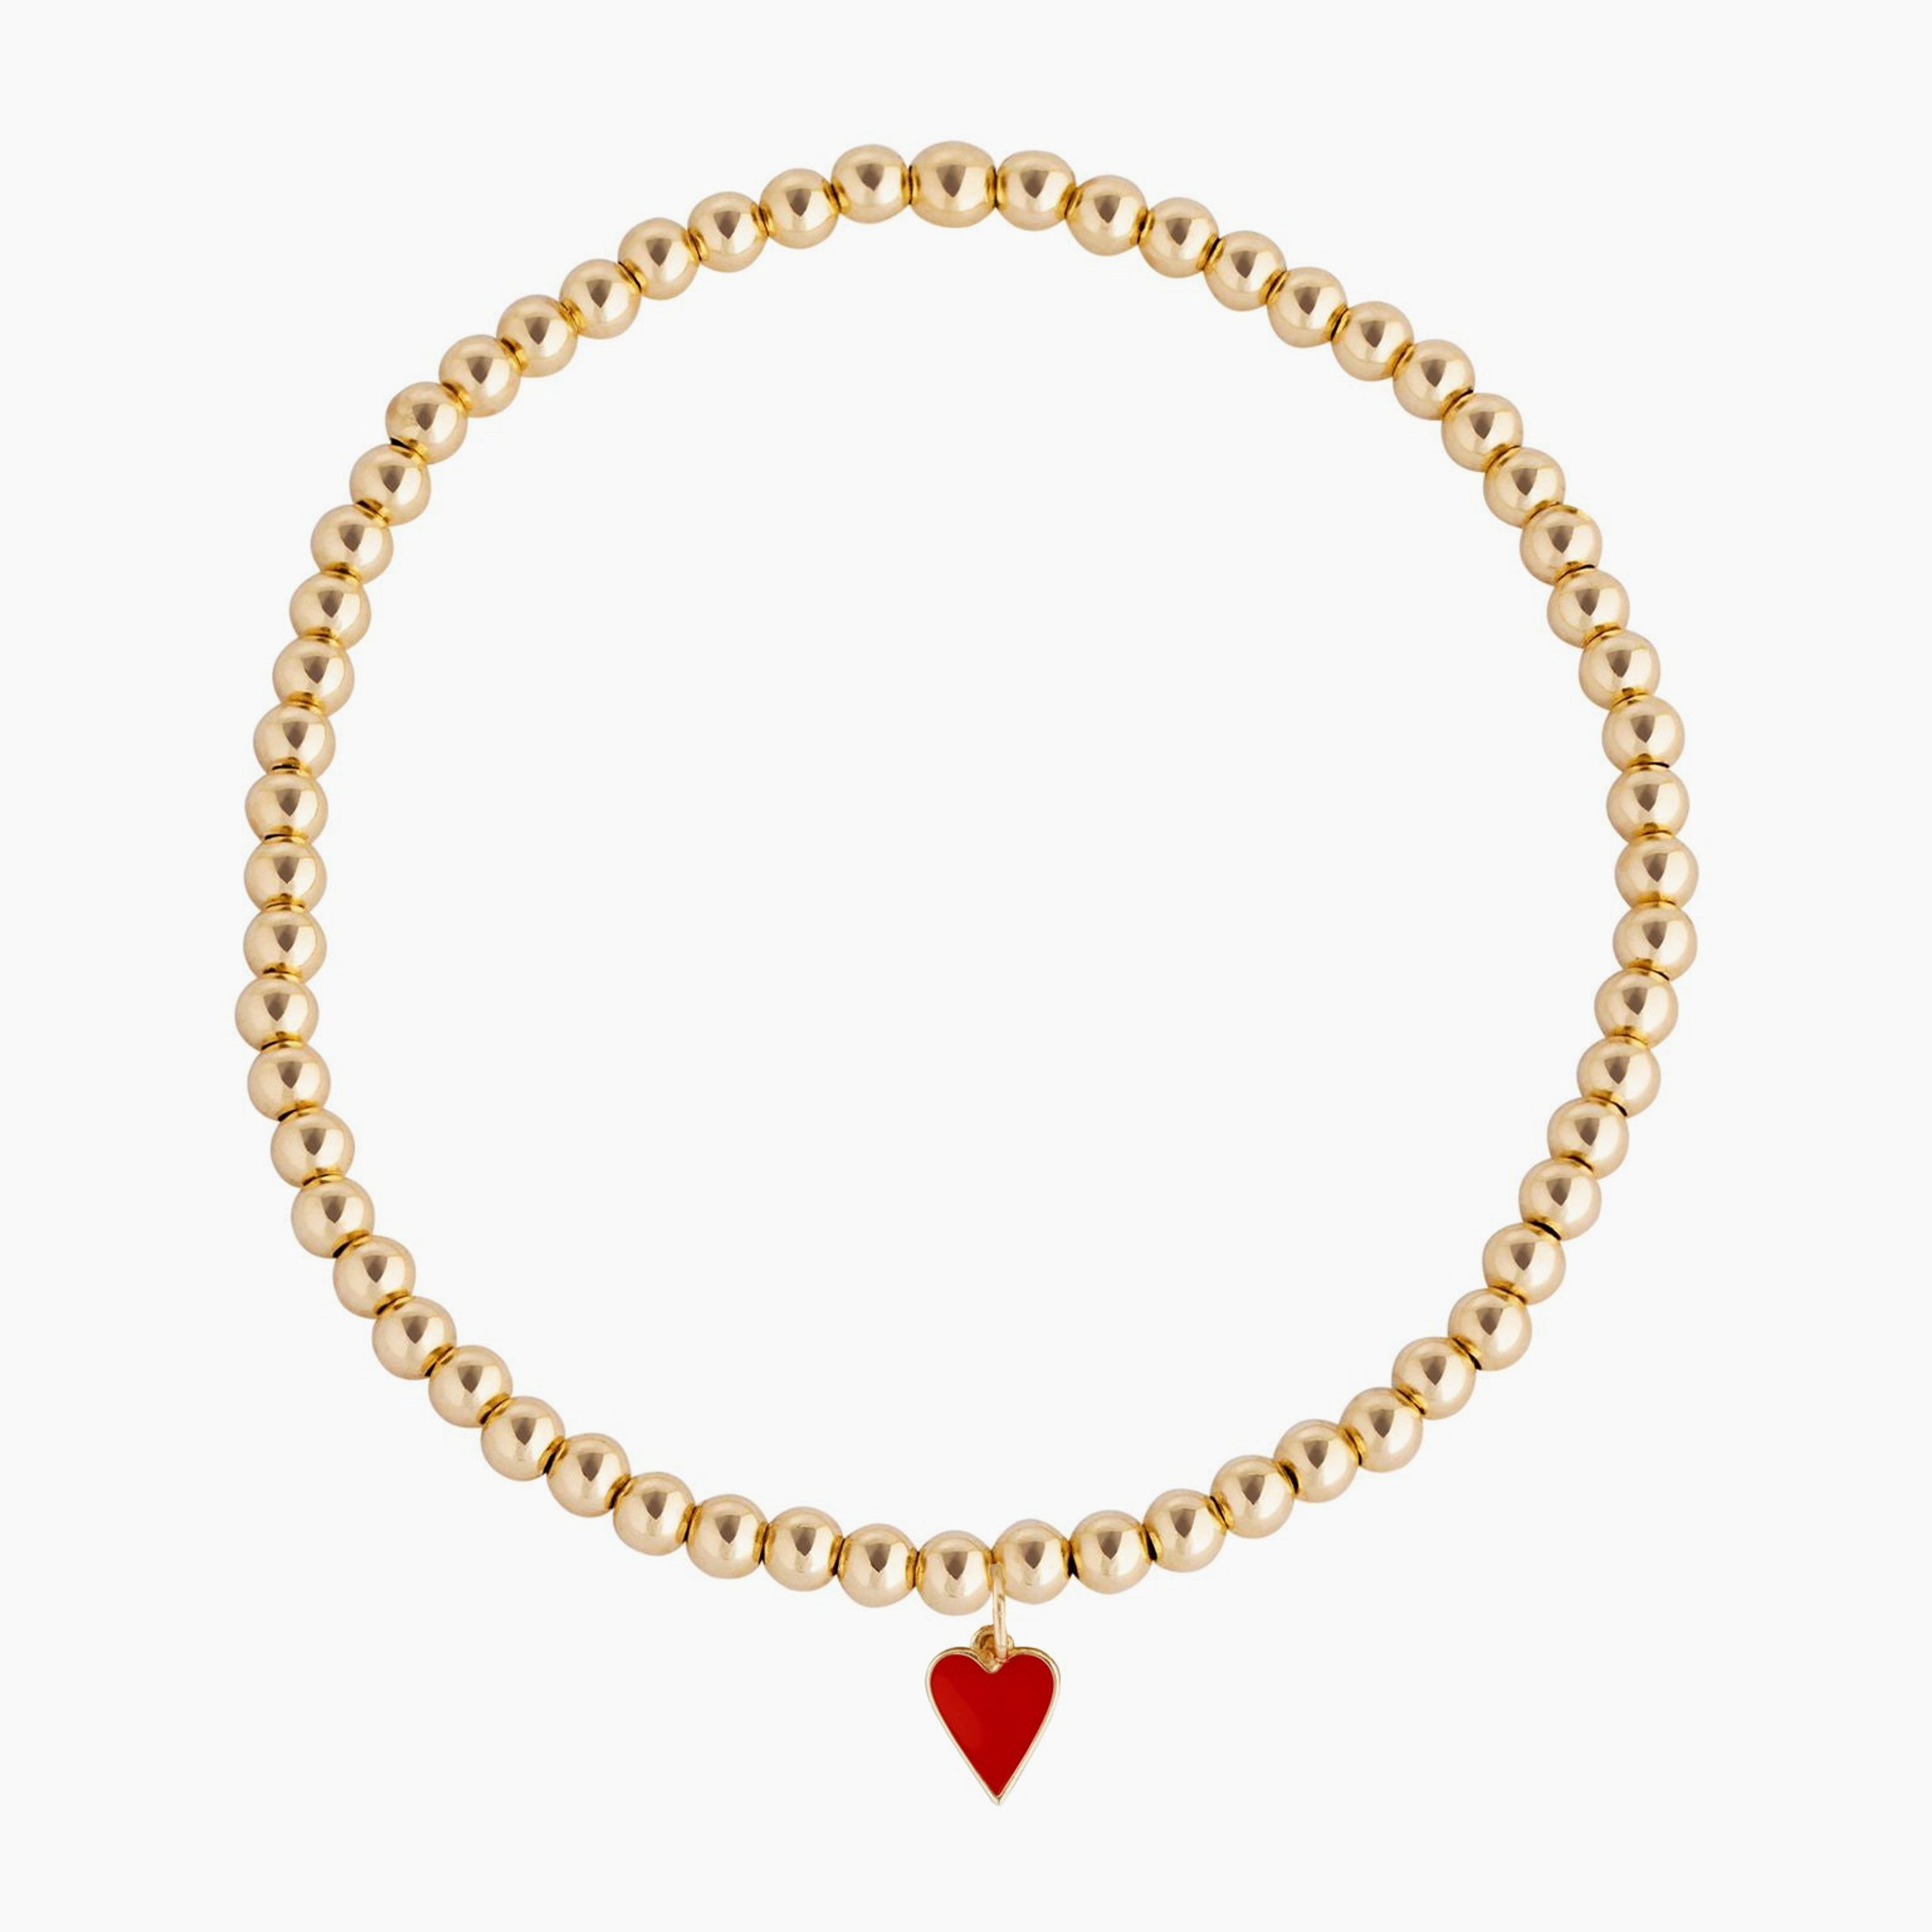 Nothing But Love Gold Filled Beaded Bracelet